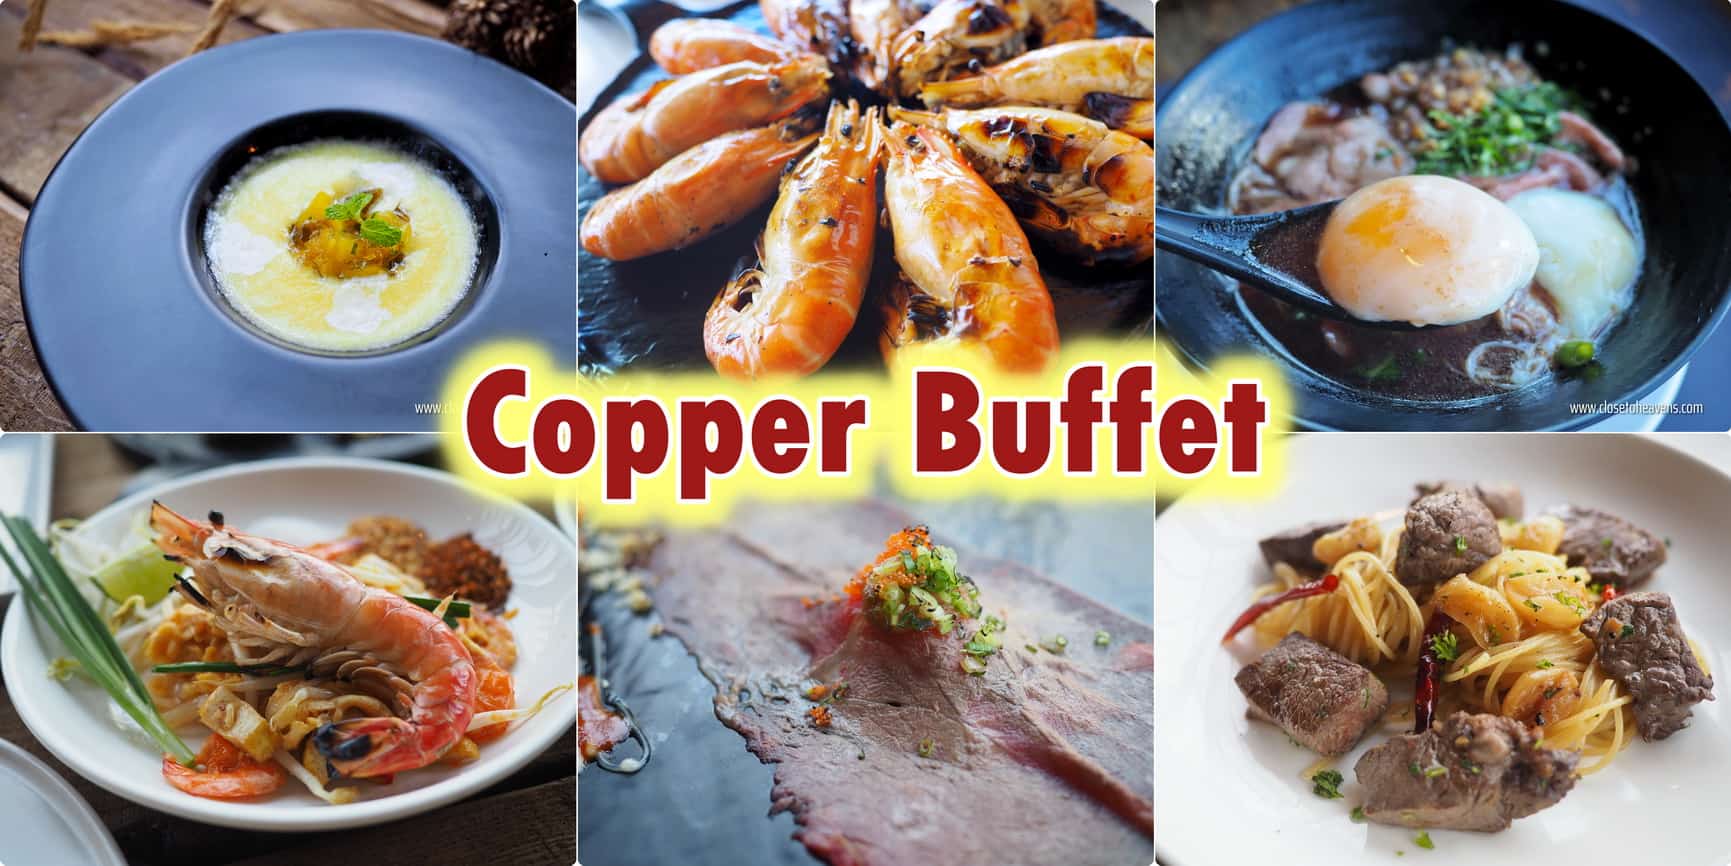 Copper Buffet มี menu อะไรให้กินบ้าง